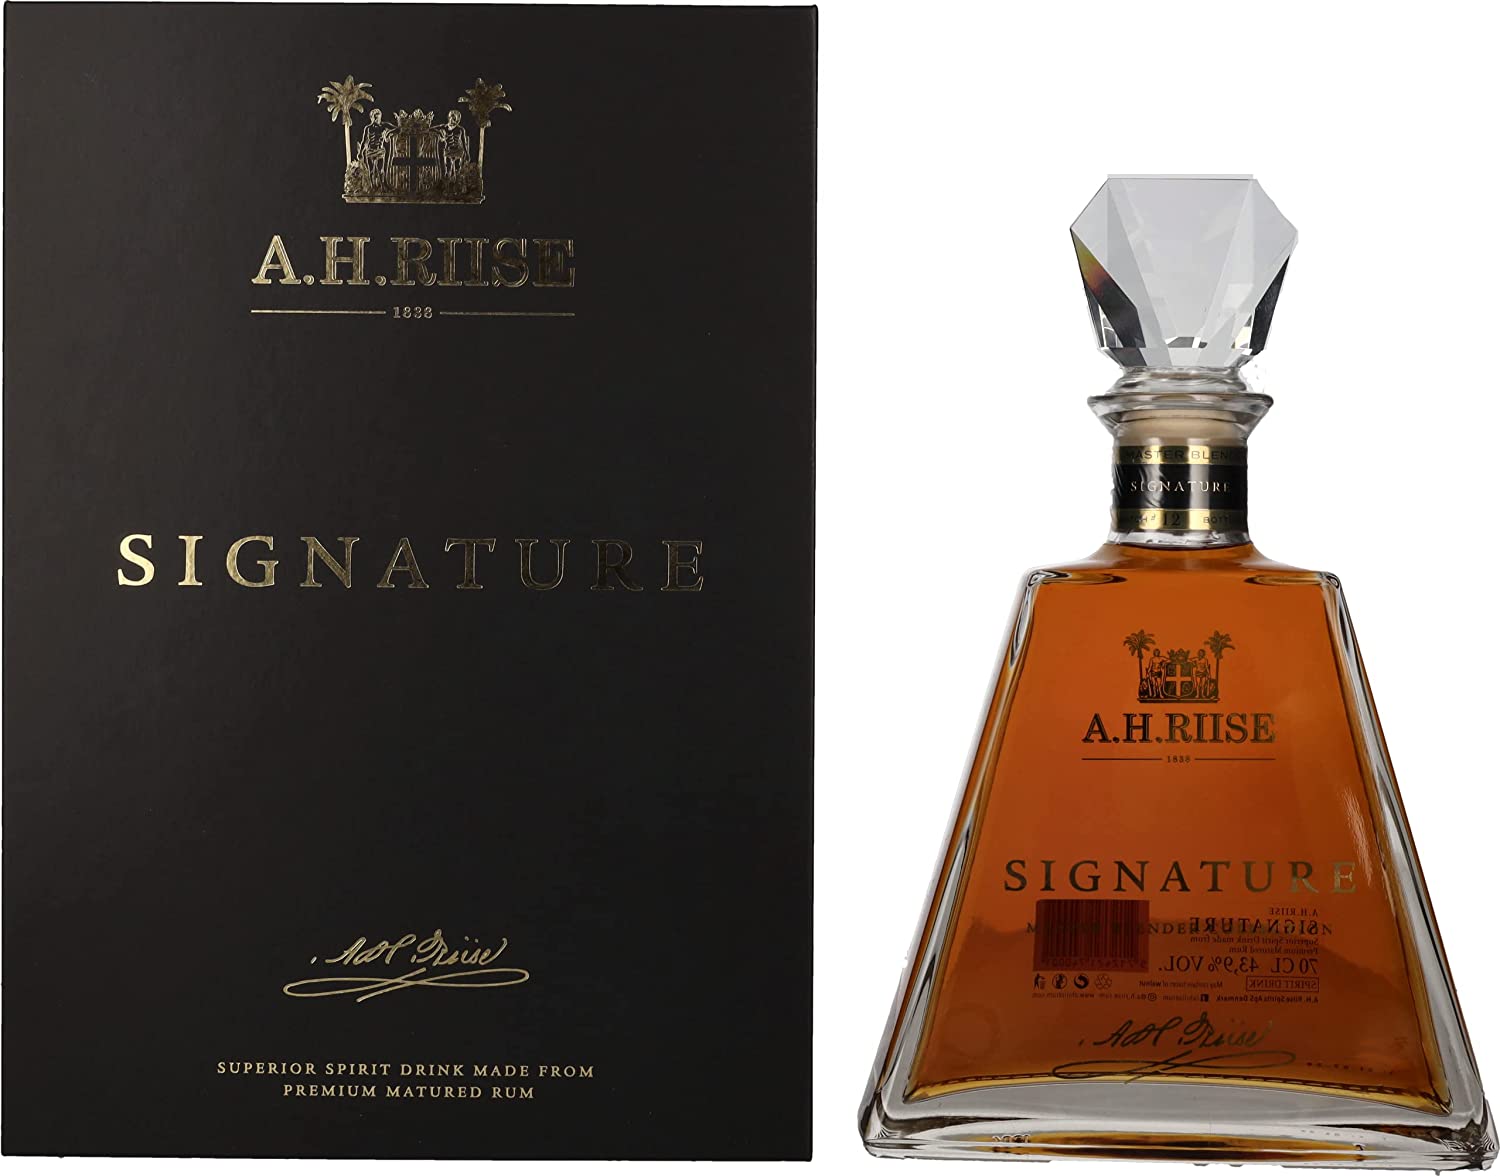 Superior Spirituosen in A.H. Rum 43,9% 0,7L Geschenkbox Rum / / | Signature | | Riise // | Rum Spirit Bundesbrand